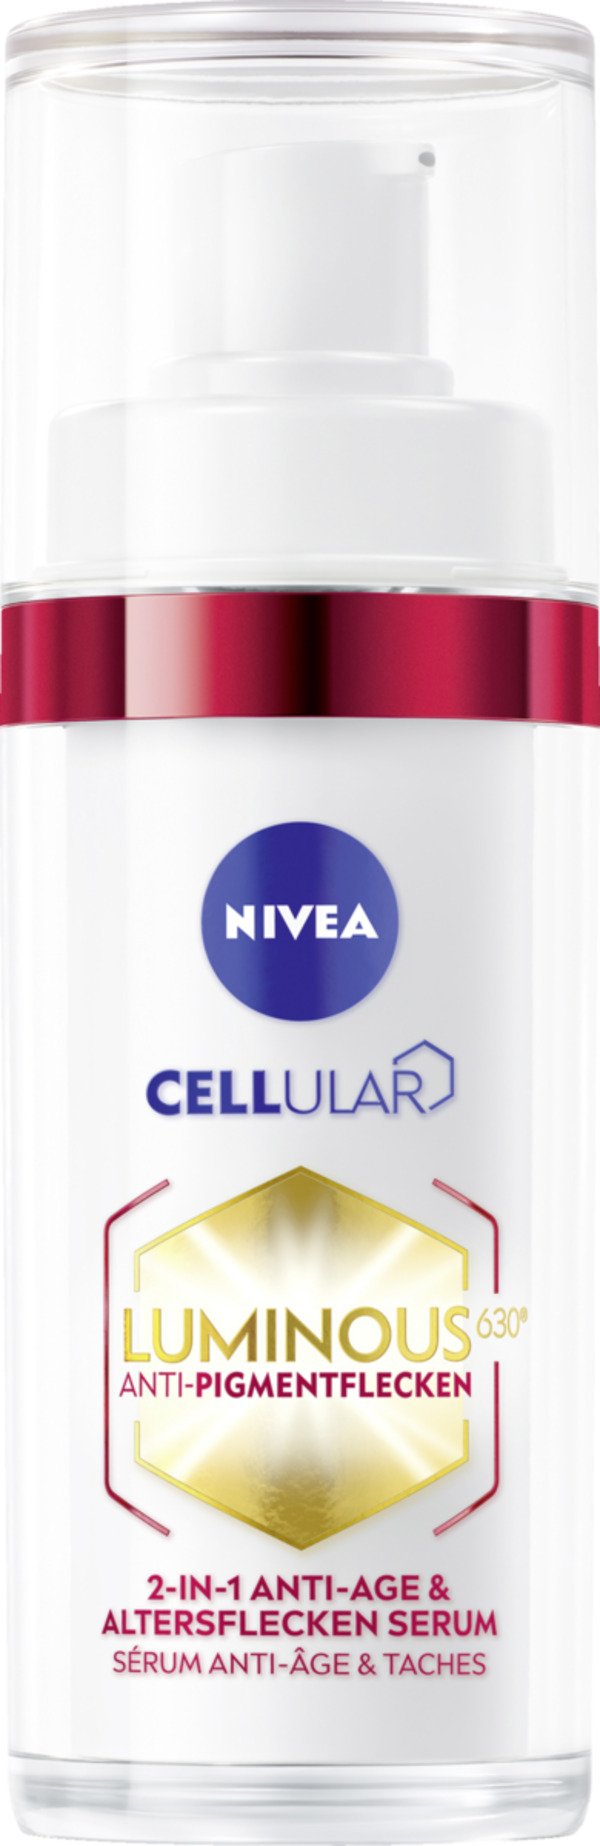 Bild 1 von NIVEA Cellular Luminous 630 Anti-Pigmentflecken Altersflecken Serum